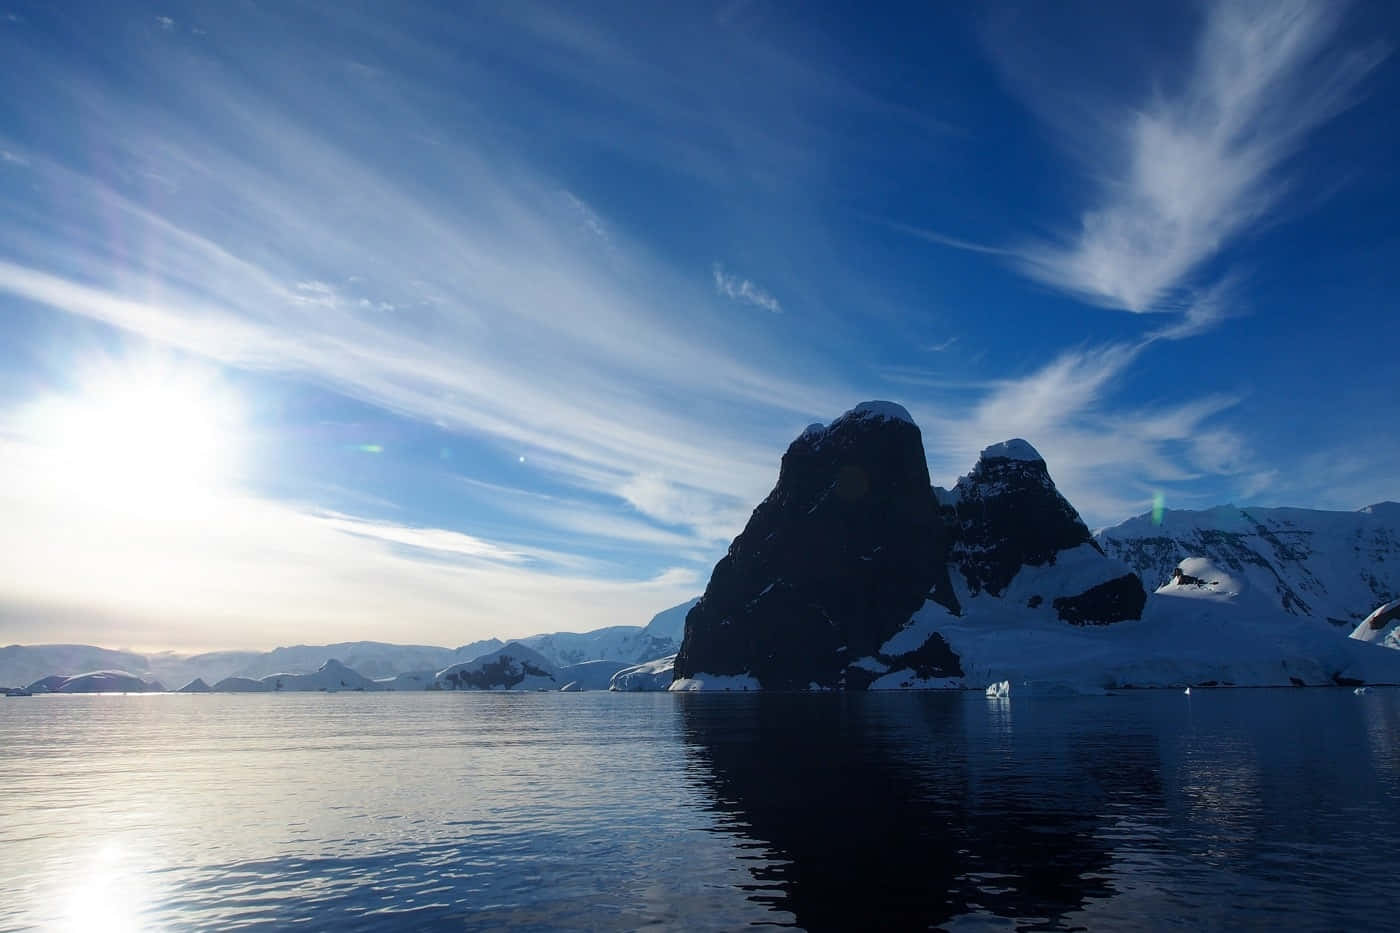 Udforskningenaf Antarktis' Vidundere